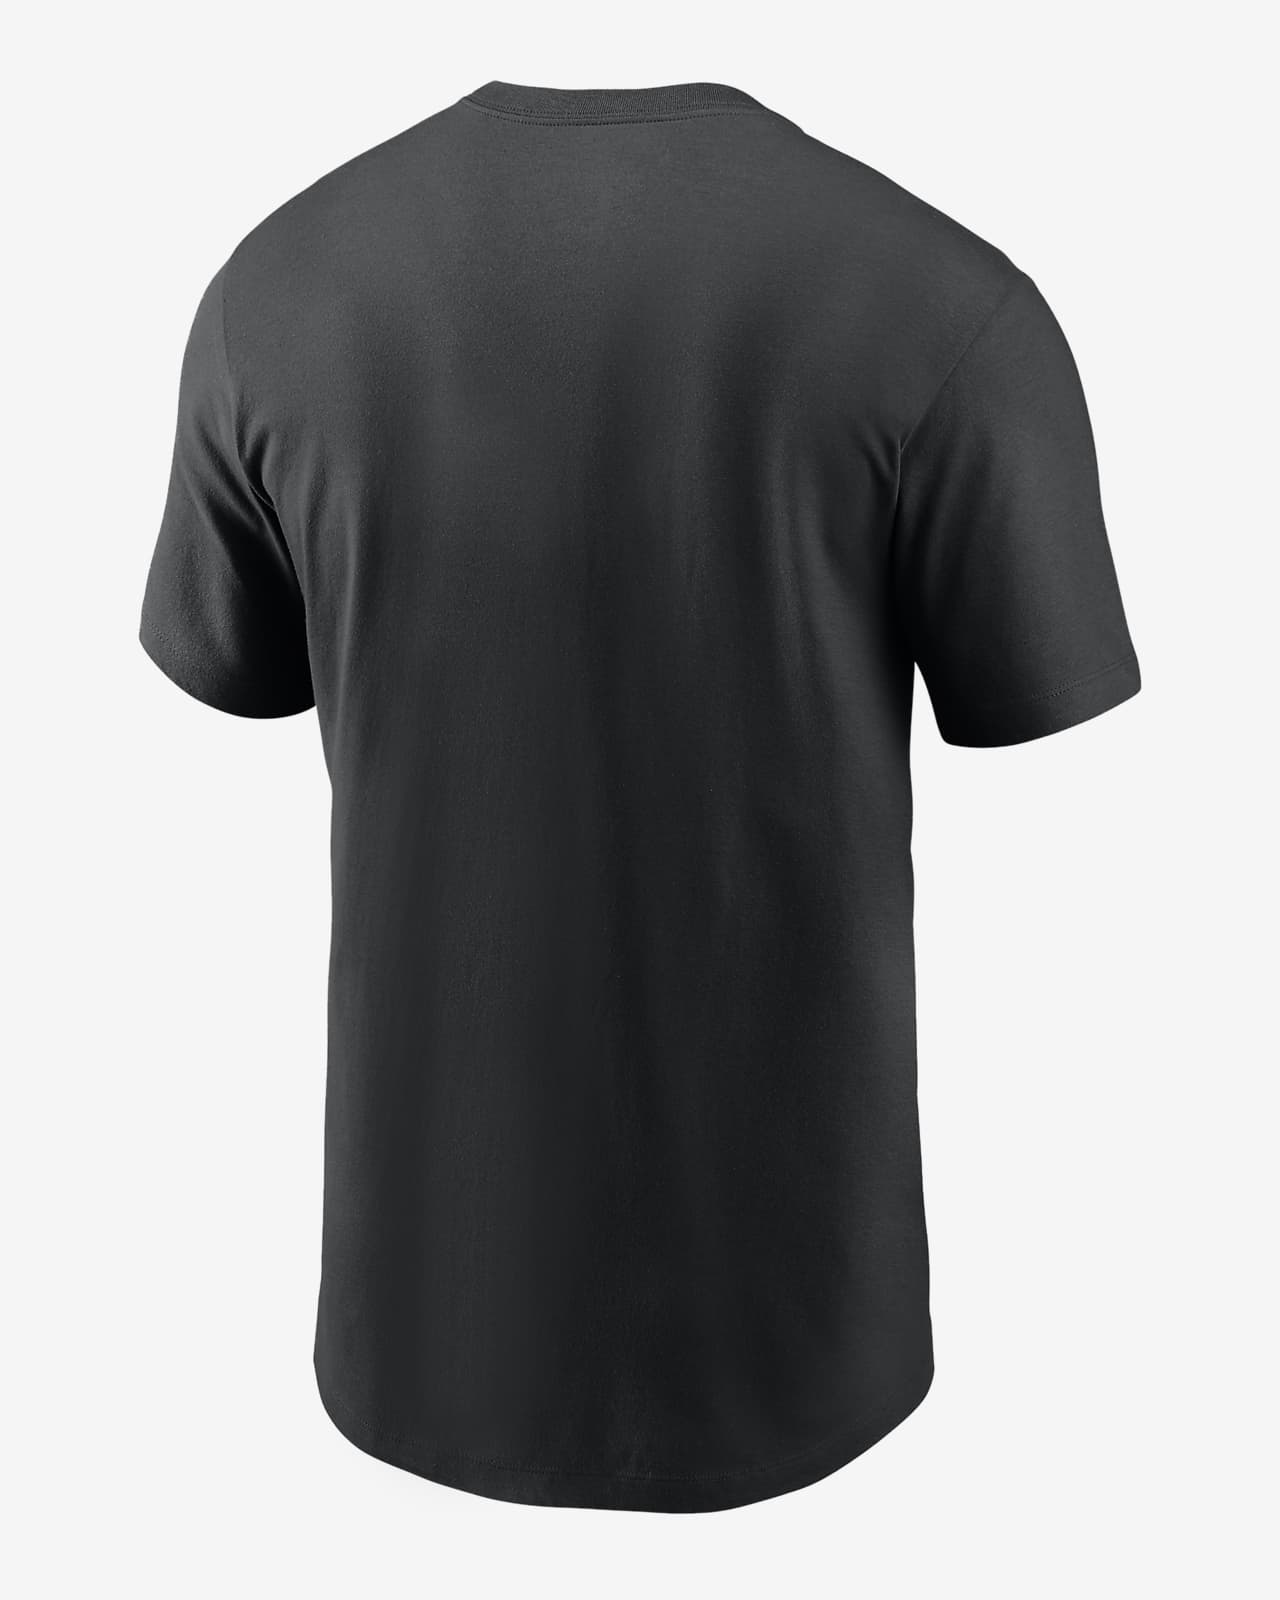 Plain Black Net Sport Mens T Shirt, Size: Medium at Rs 200/piece